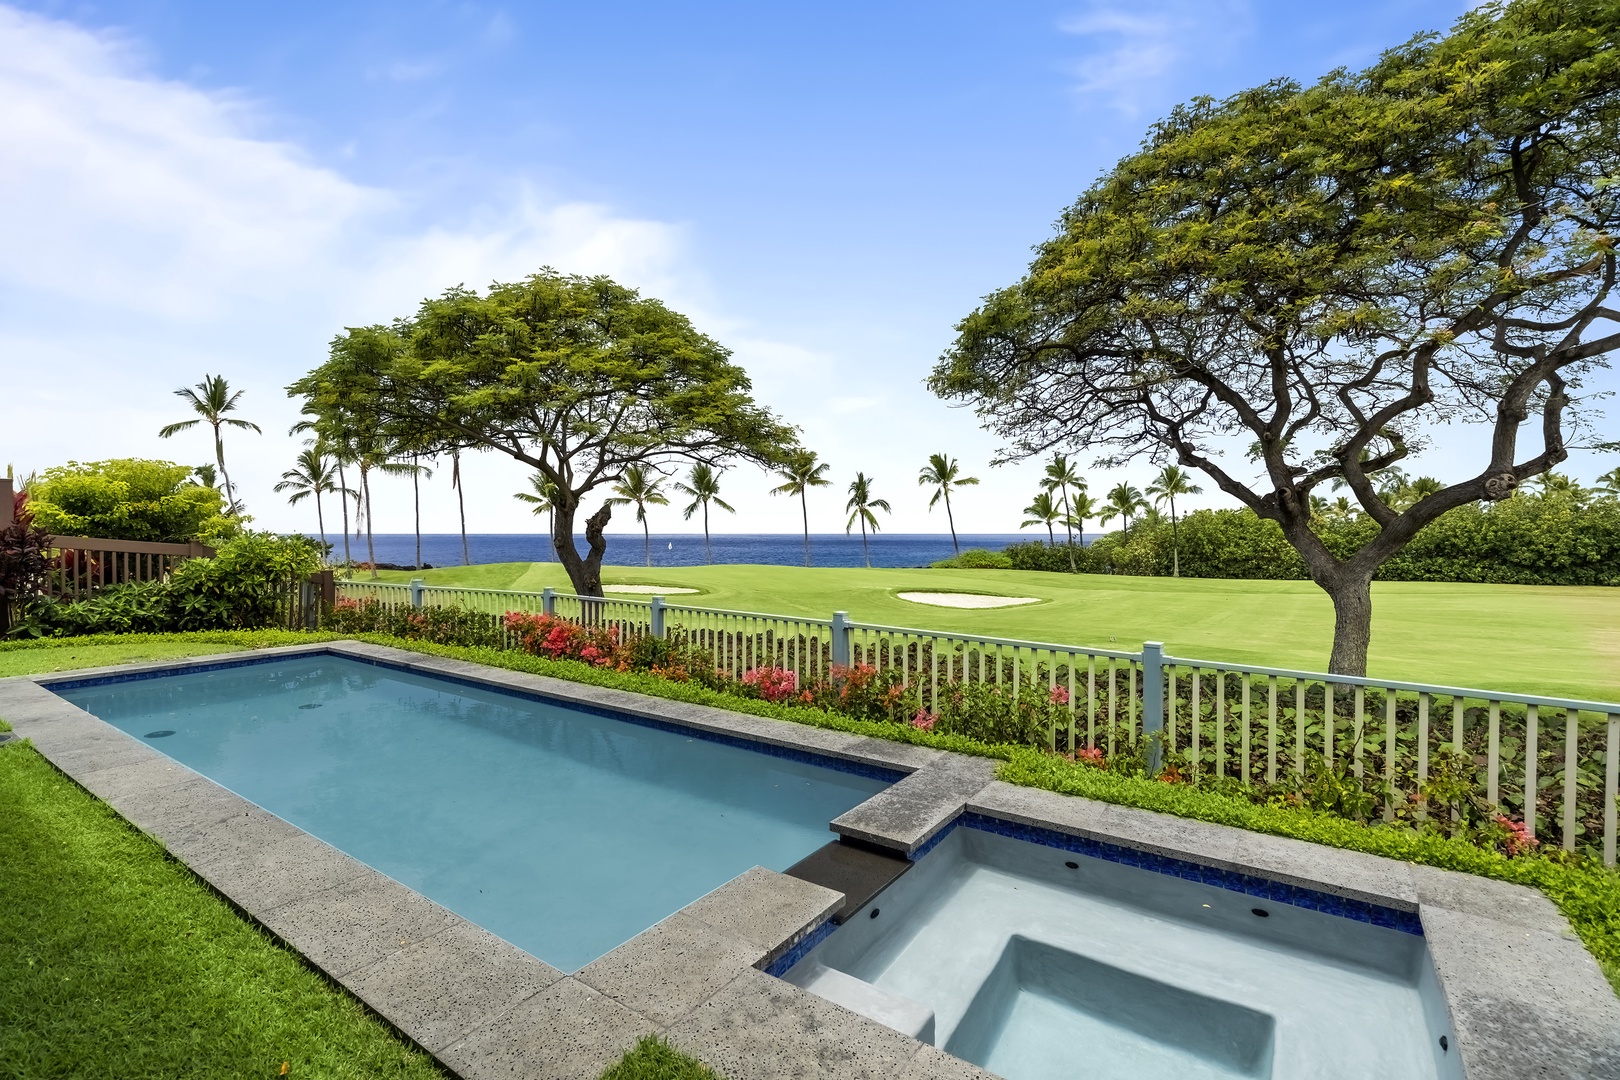 Kailua Kona Vacation Rentals, Holua Kai #27 - Lap pool perfect for exercising